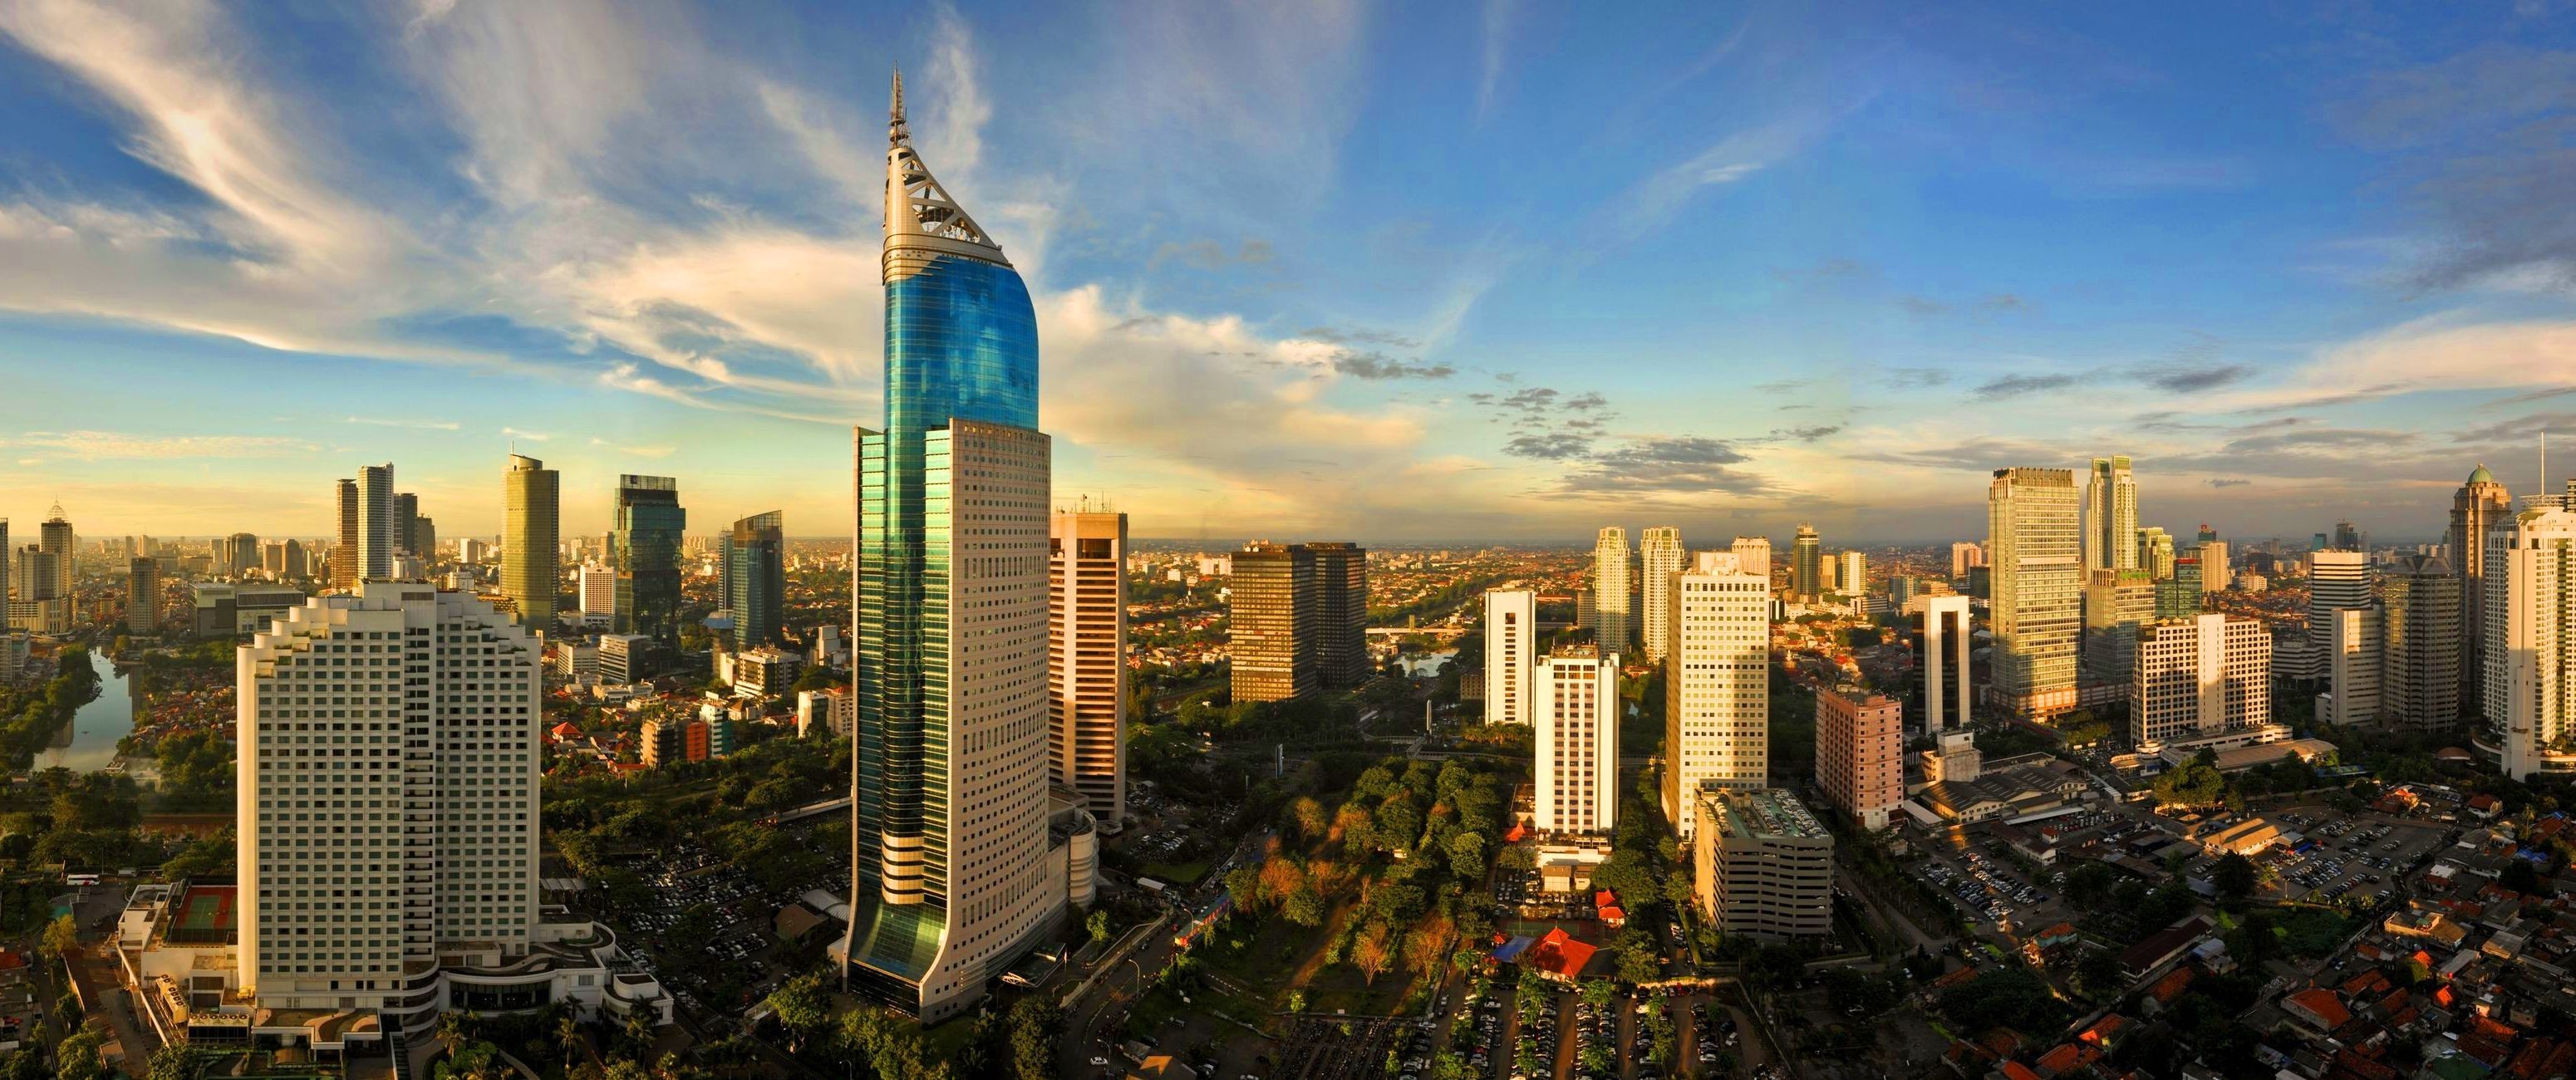 Cityscapes Indonesia Cities Skyline Jakarta Wallpaper